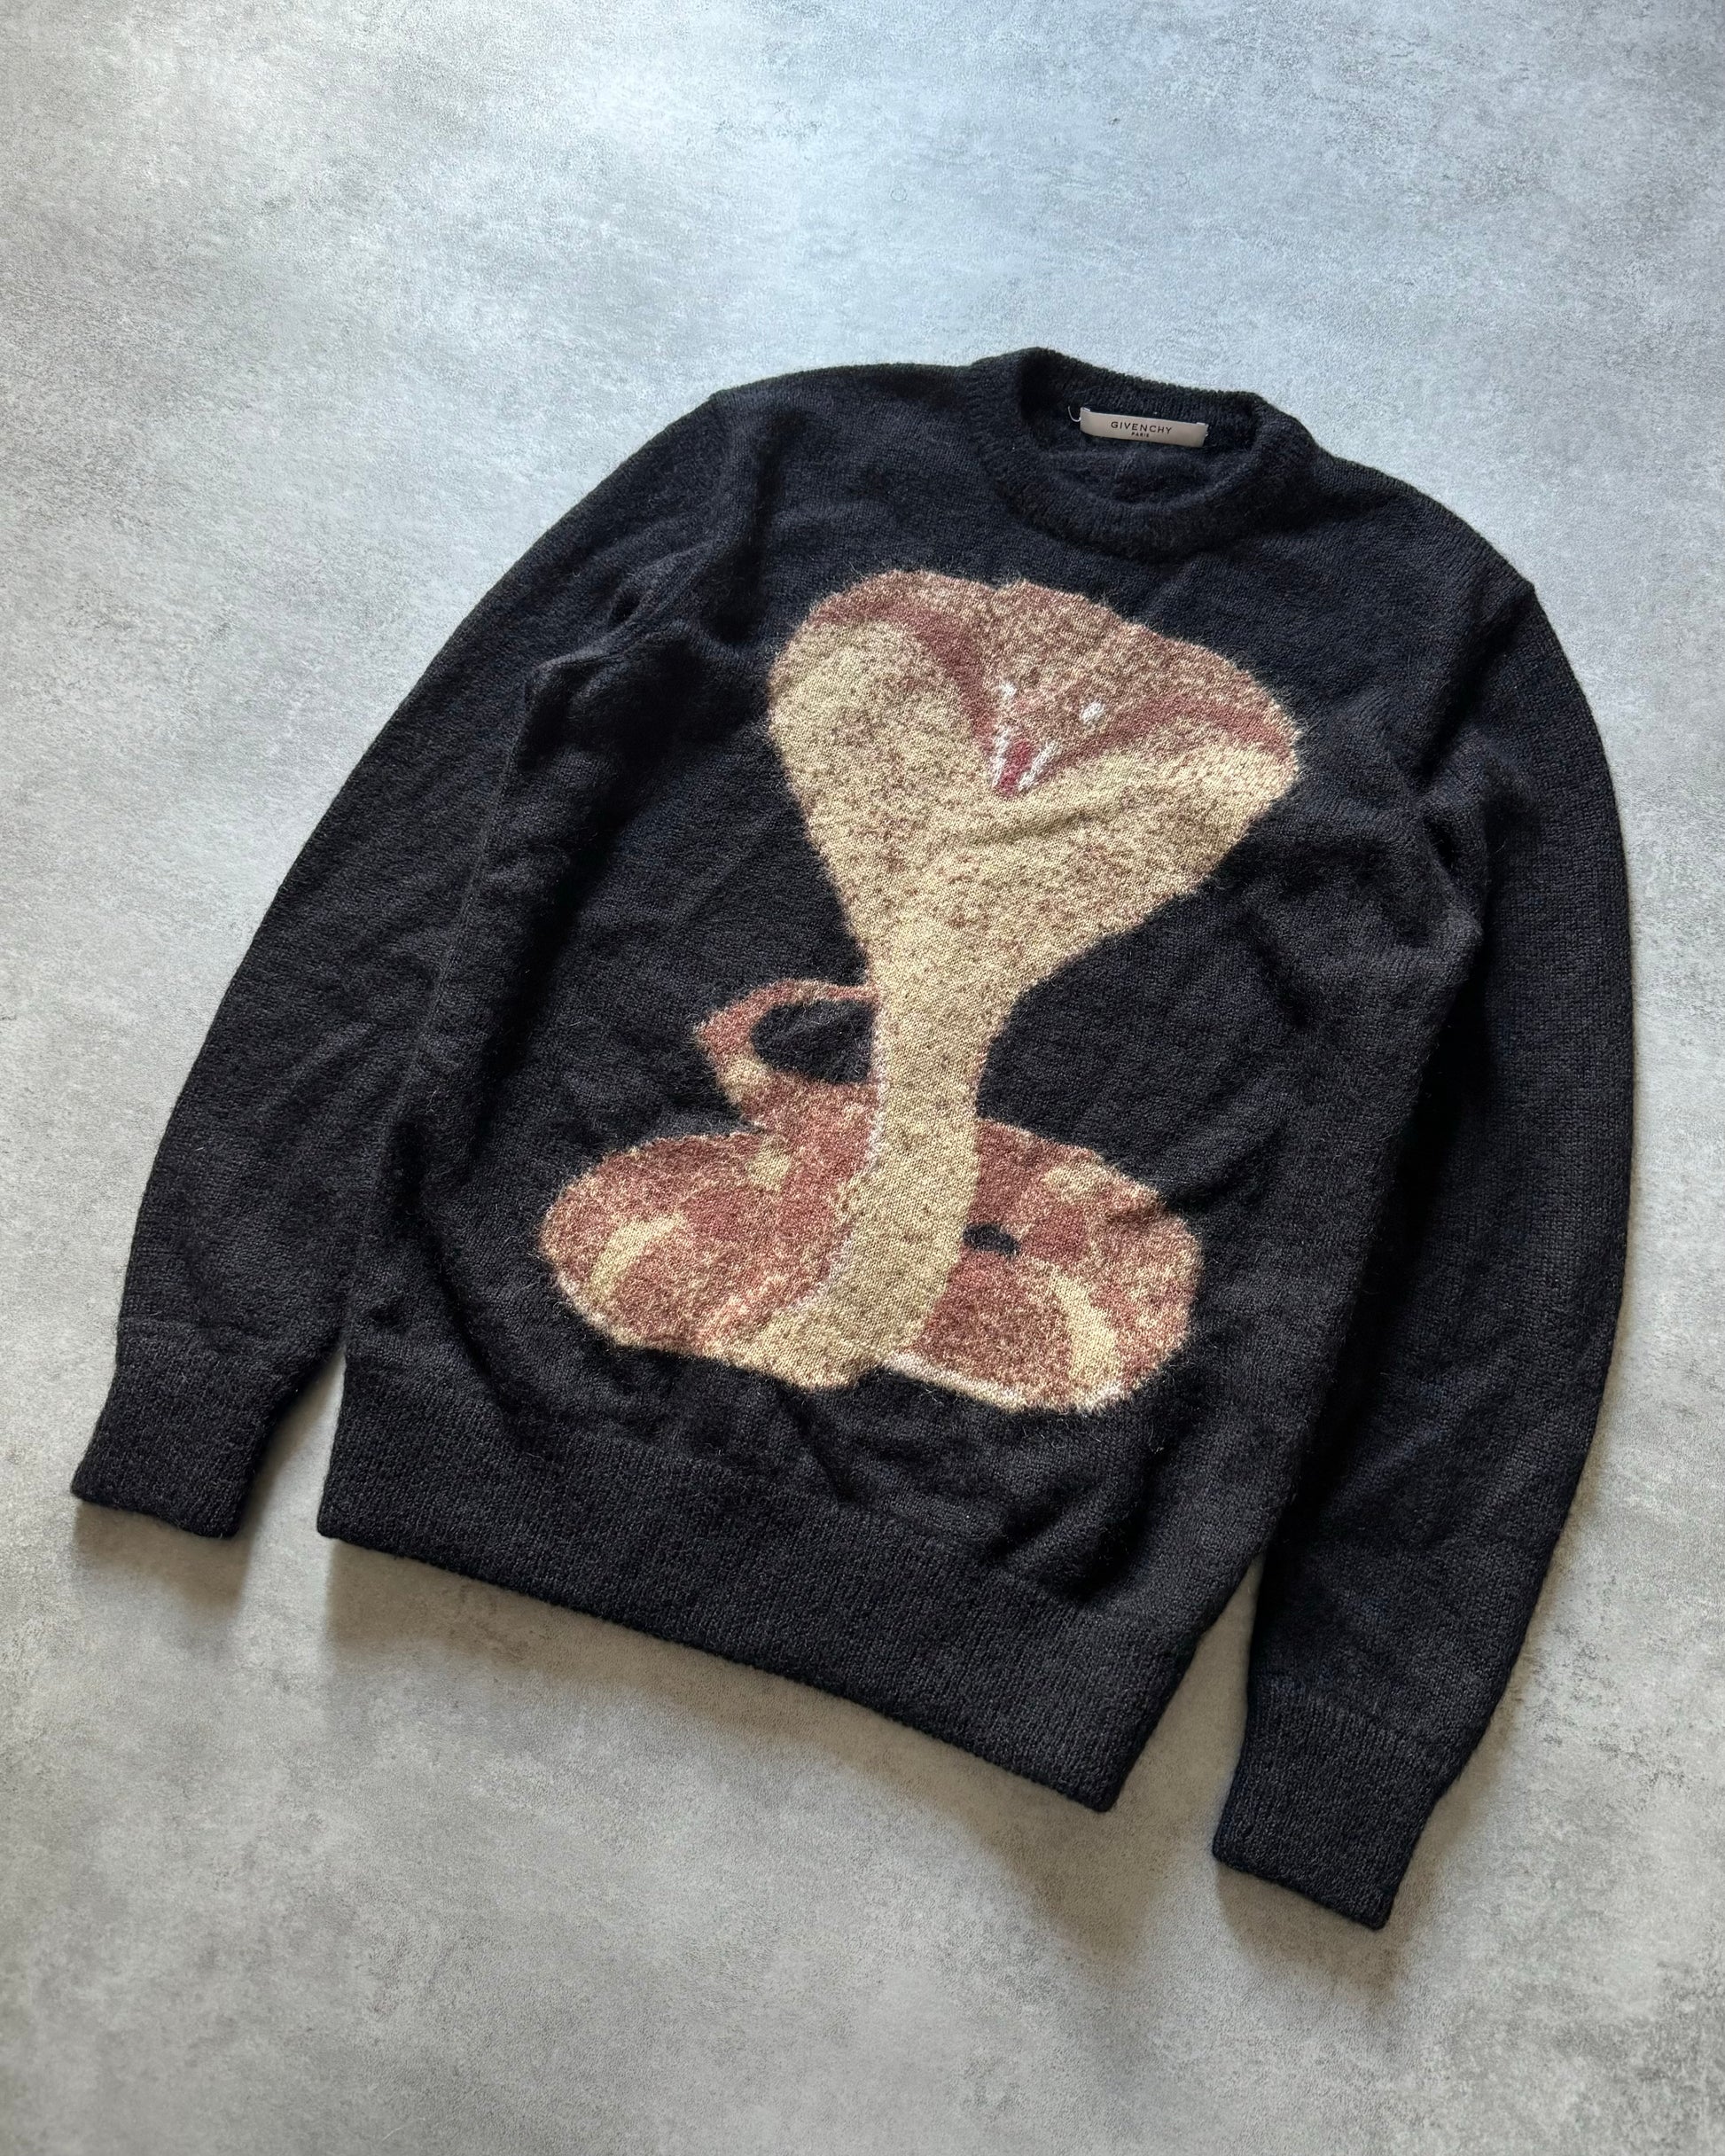 AW2016 Givenchy Cobra Mohaur Sweater by Riccardo Tisci (L) - 8